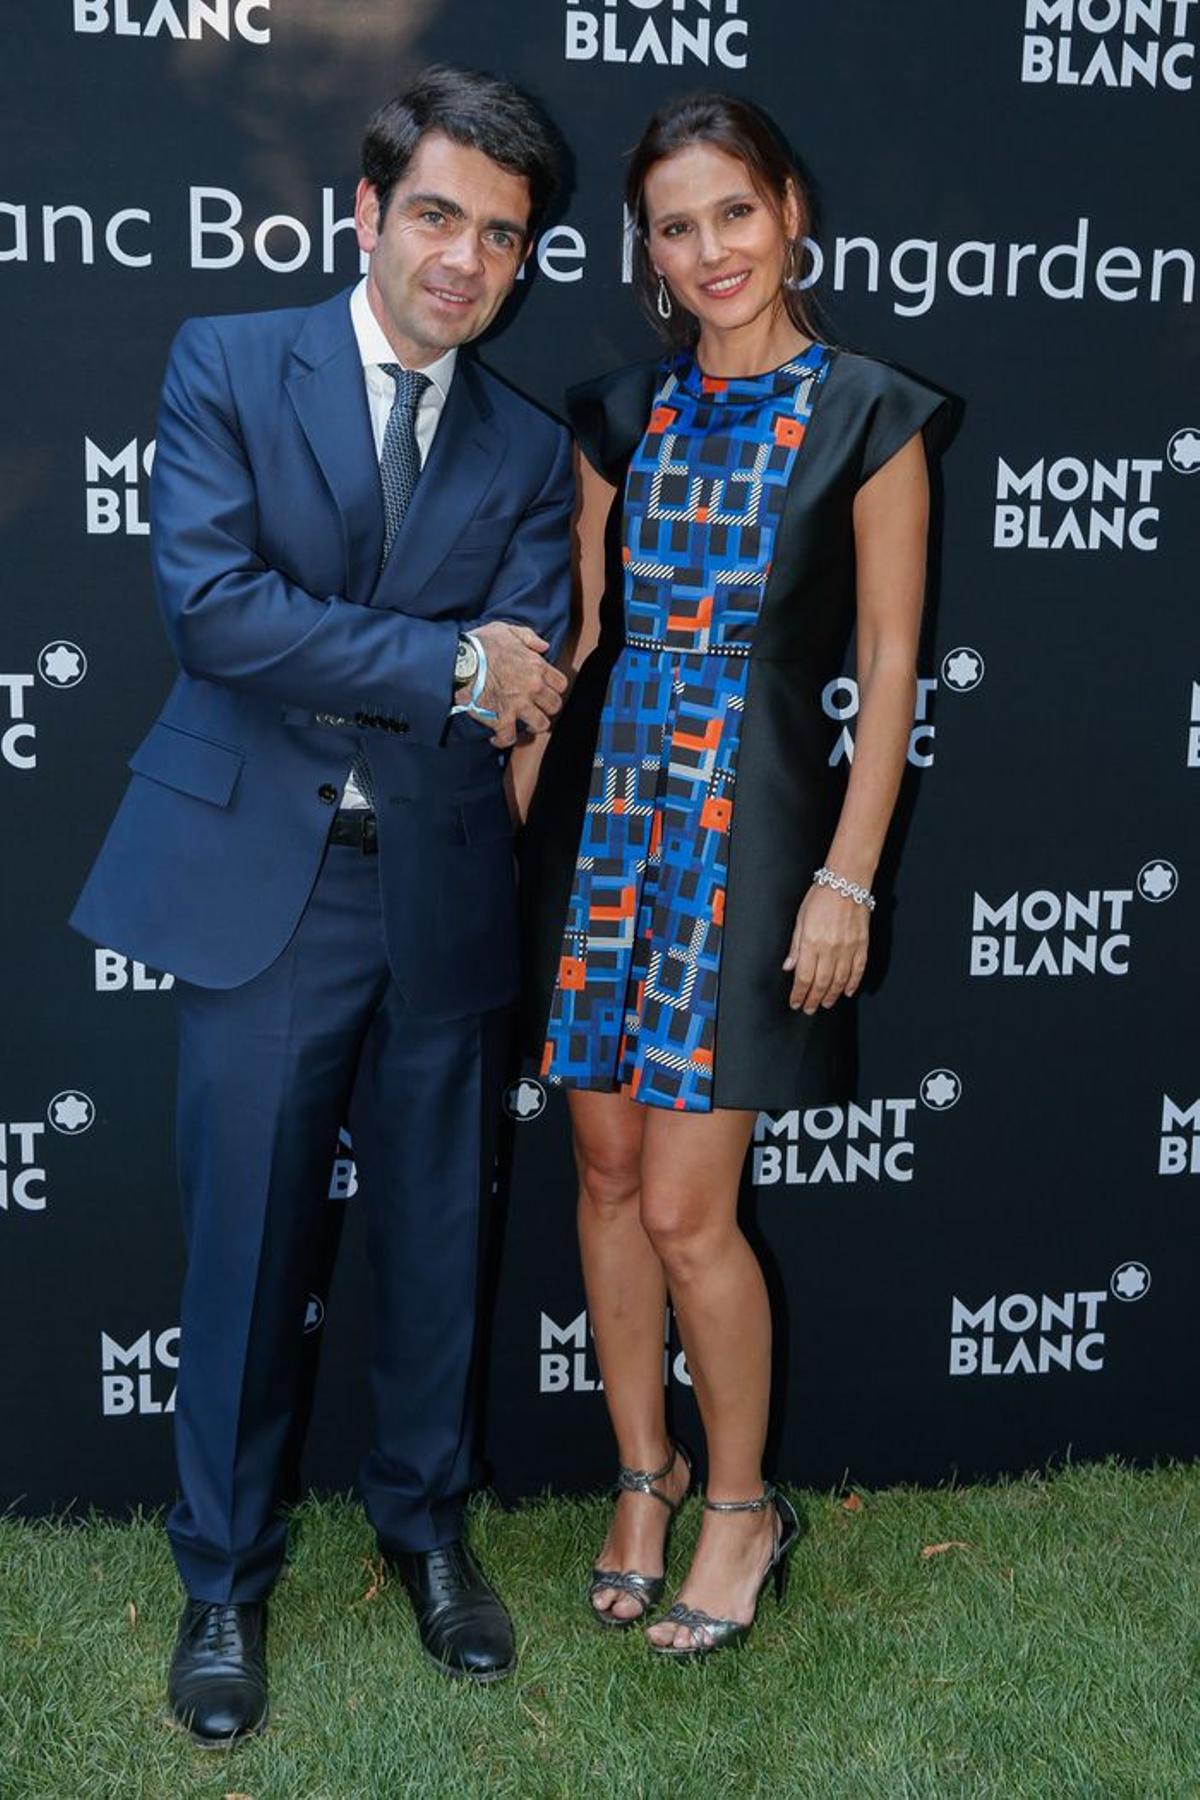 Jérôme Lambert y Virginia Ledoyen en la fiesta de Montblanc en París